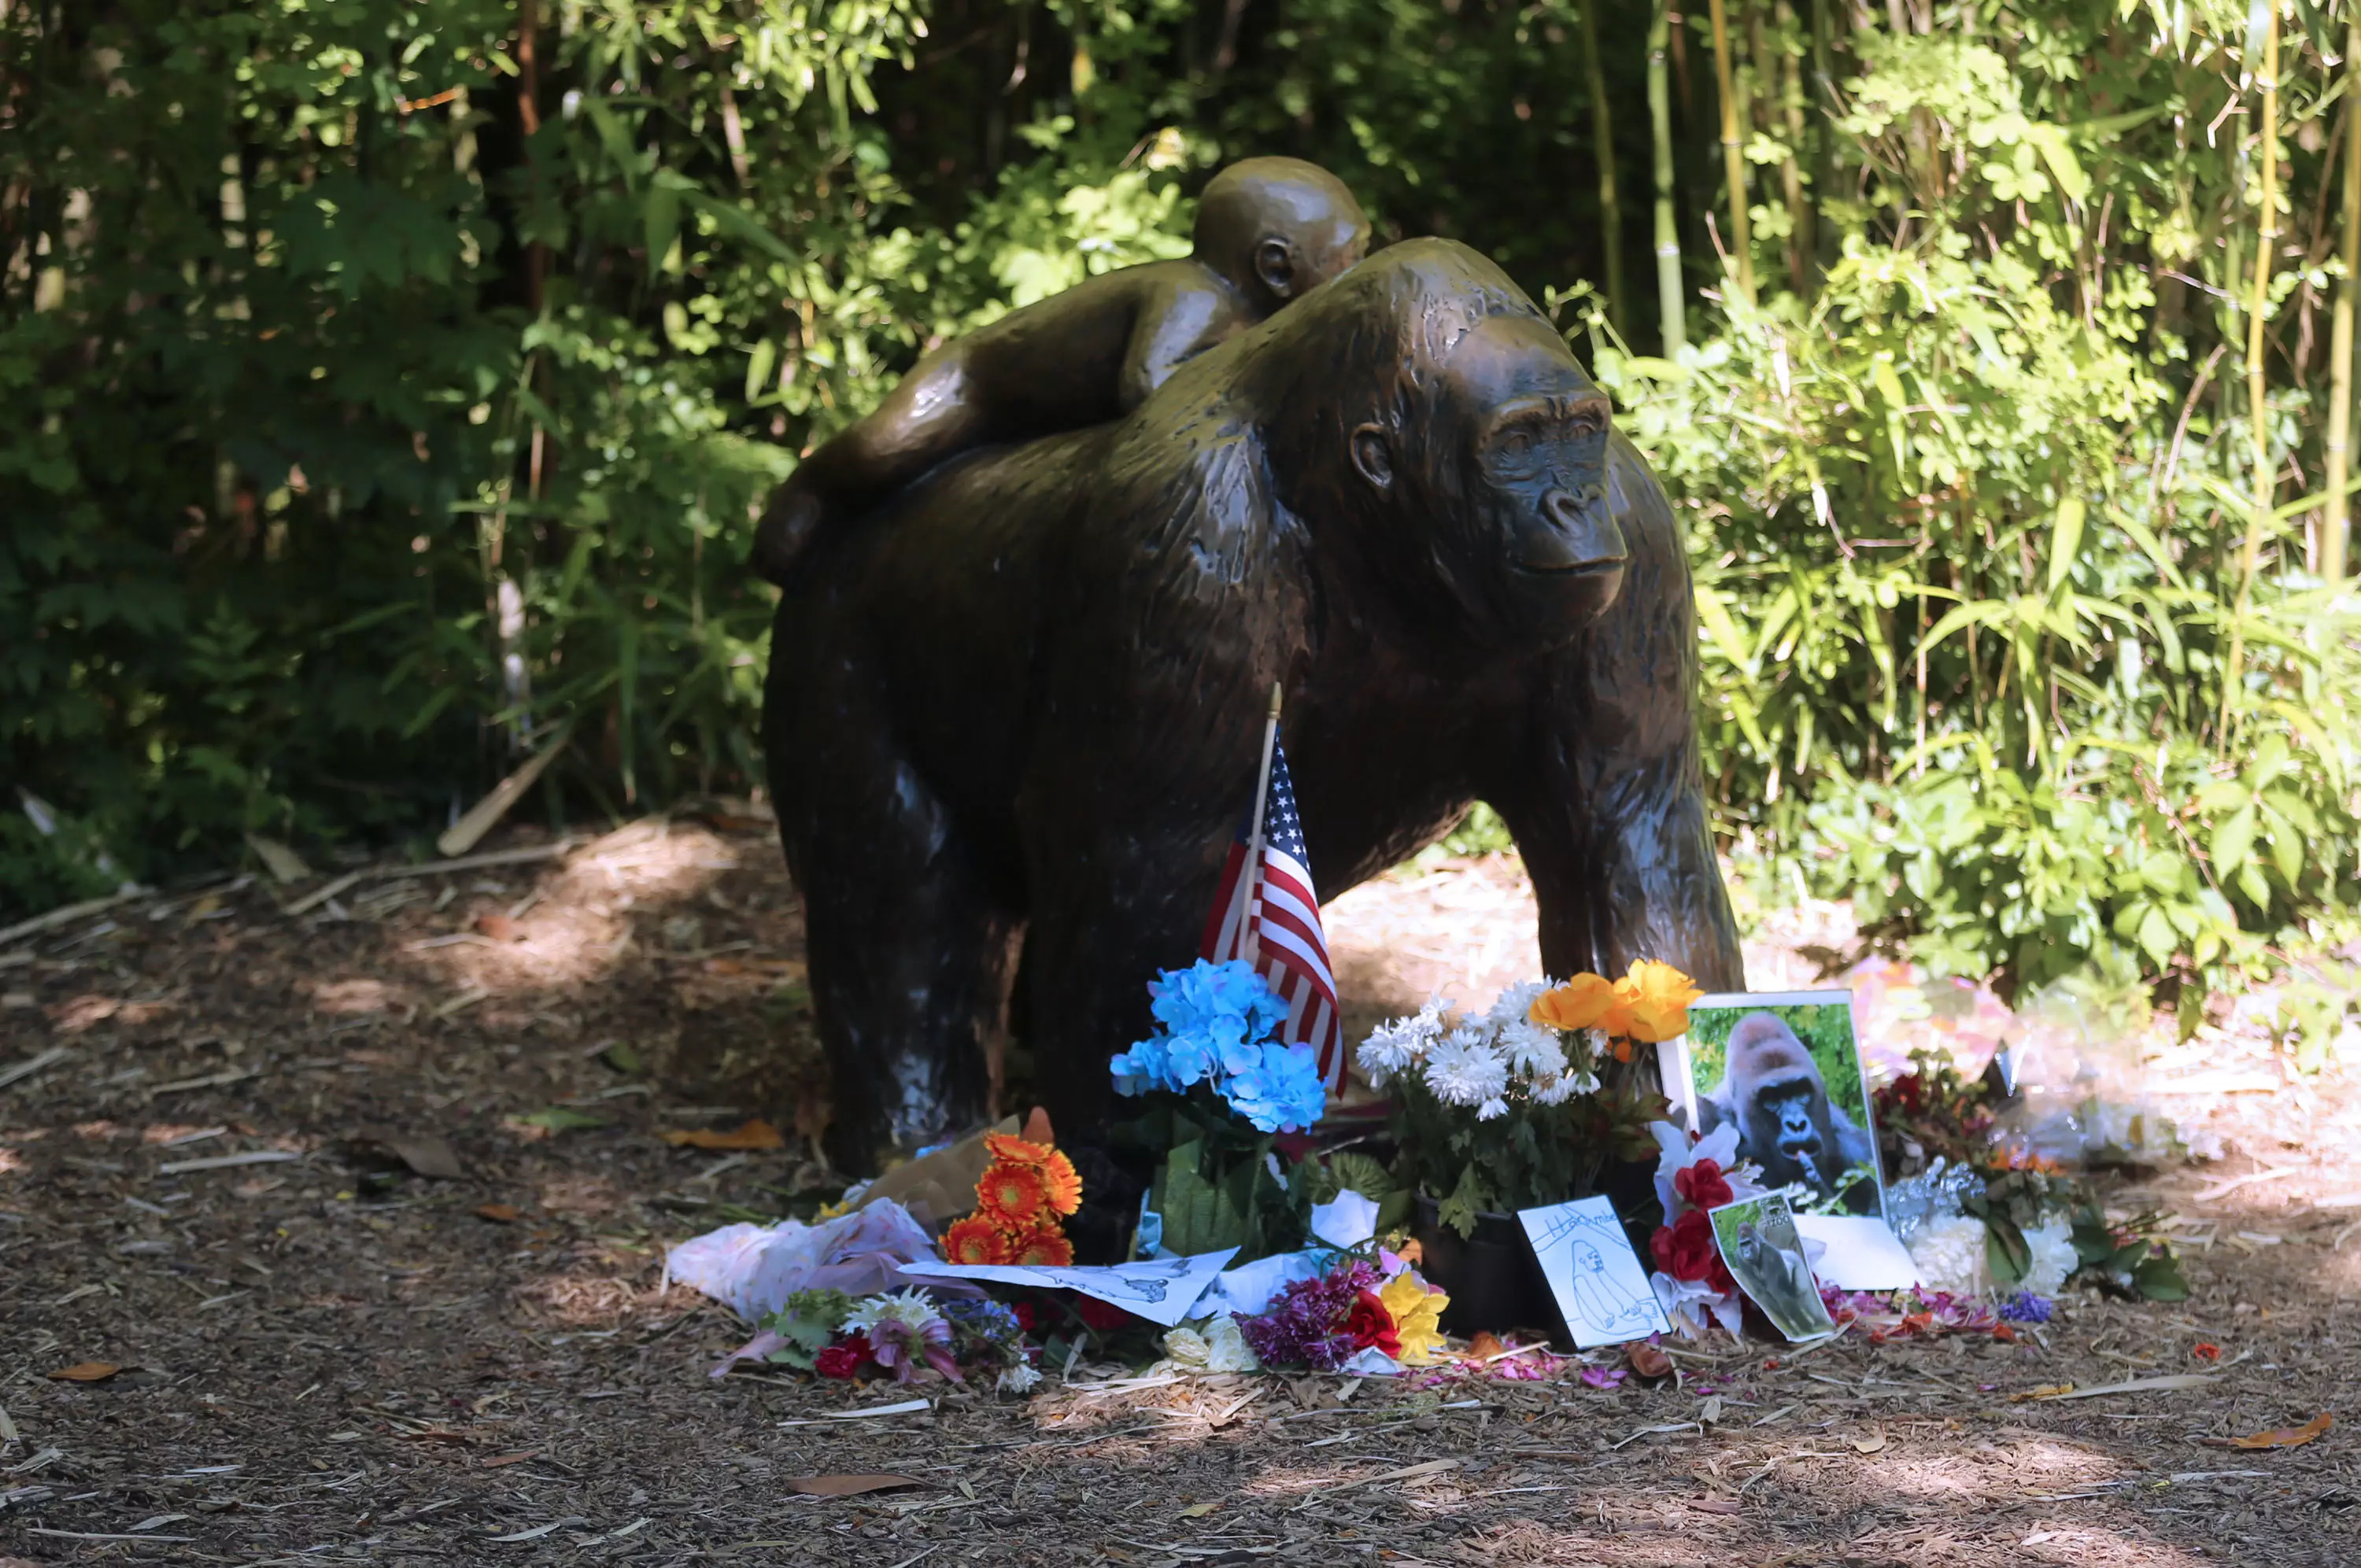 More tributes at the Gorilla World enclosure.